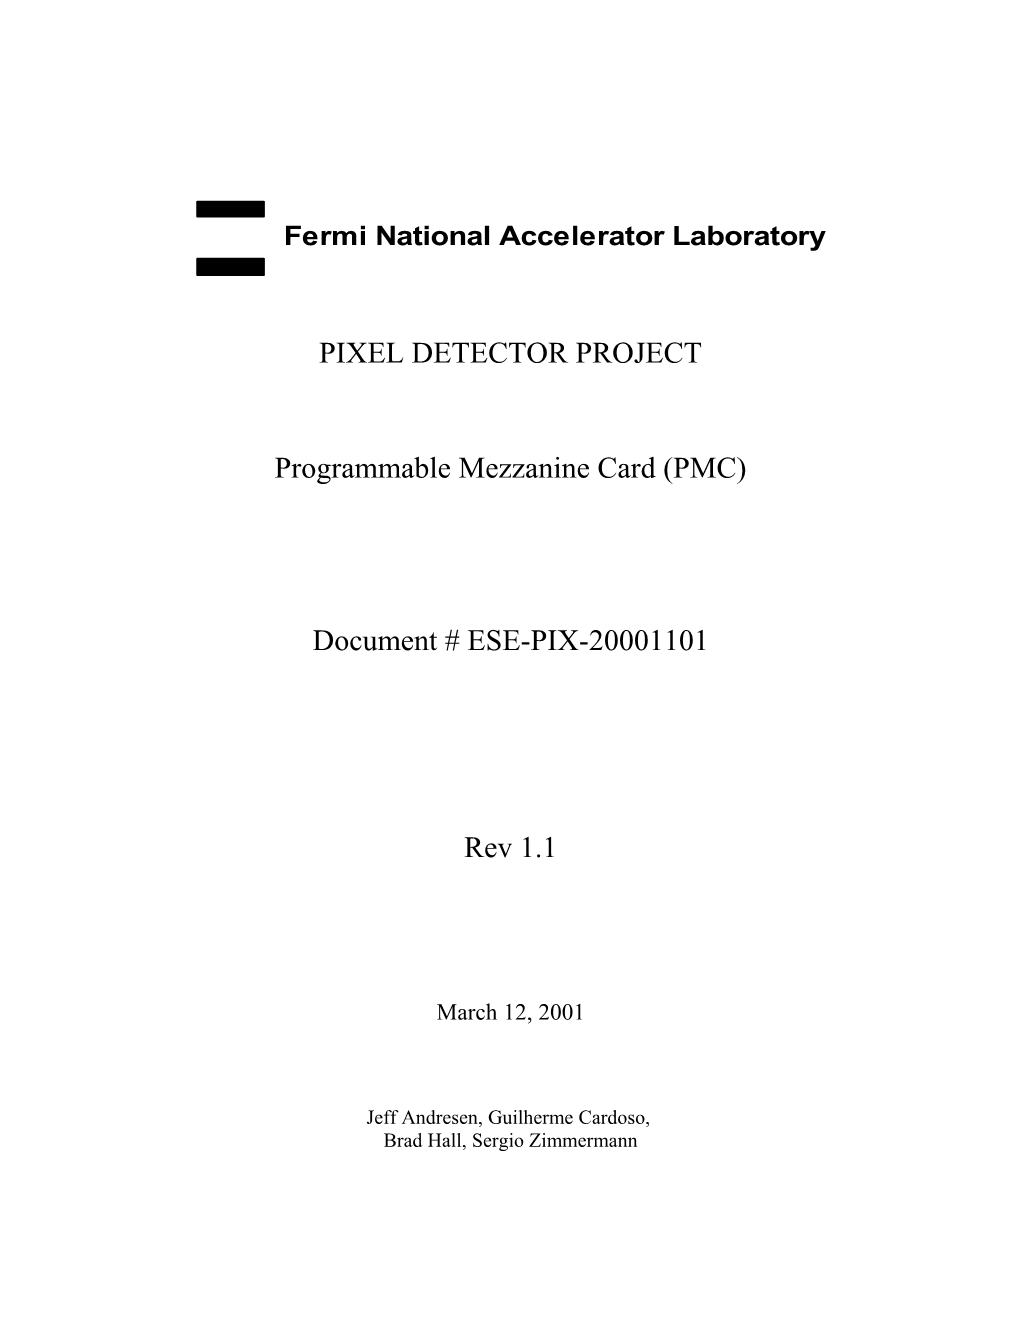 Programmable Mezzanine Card (PMC)